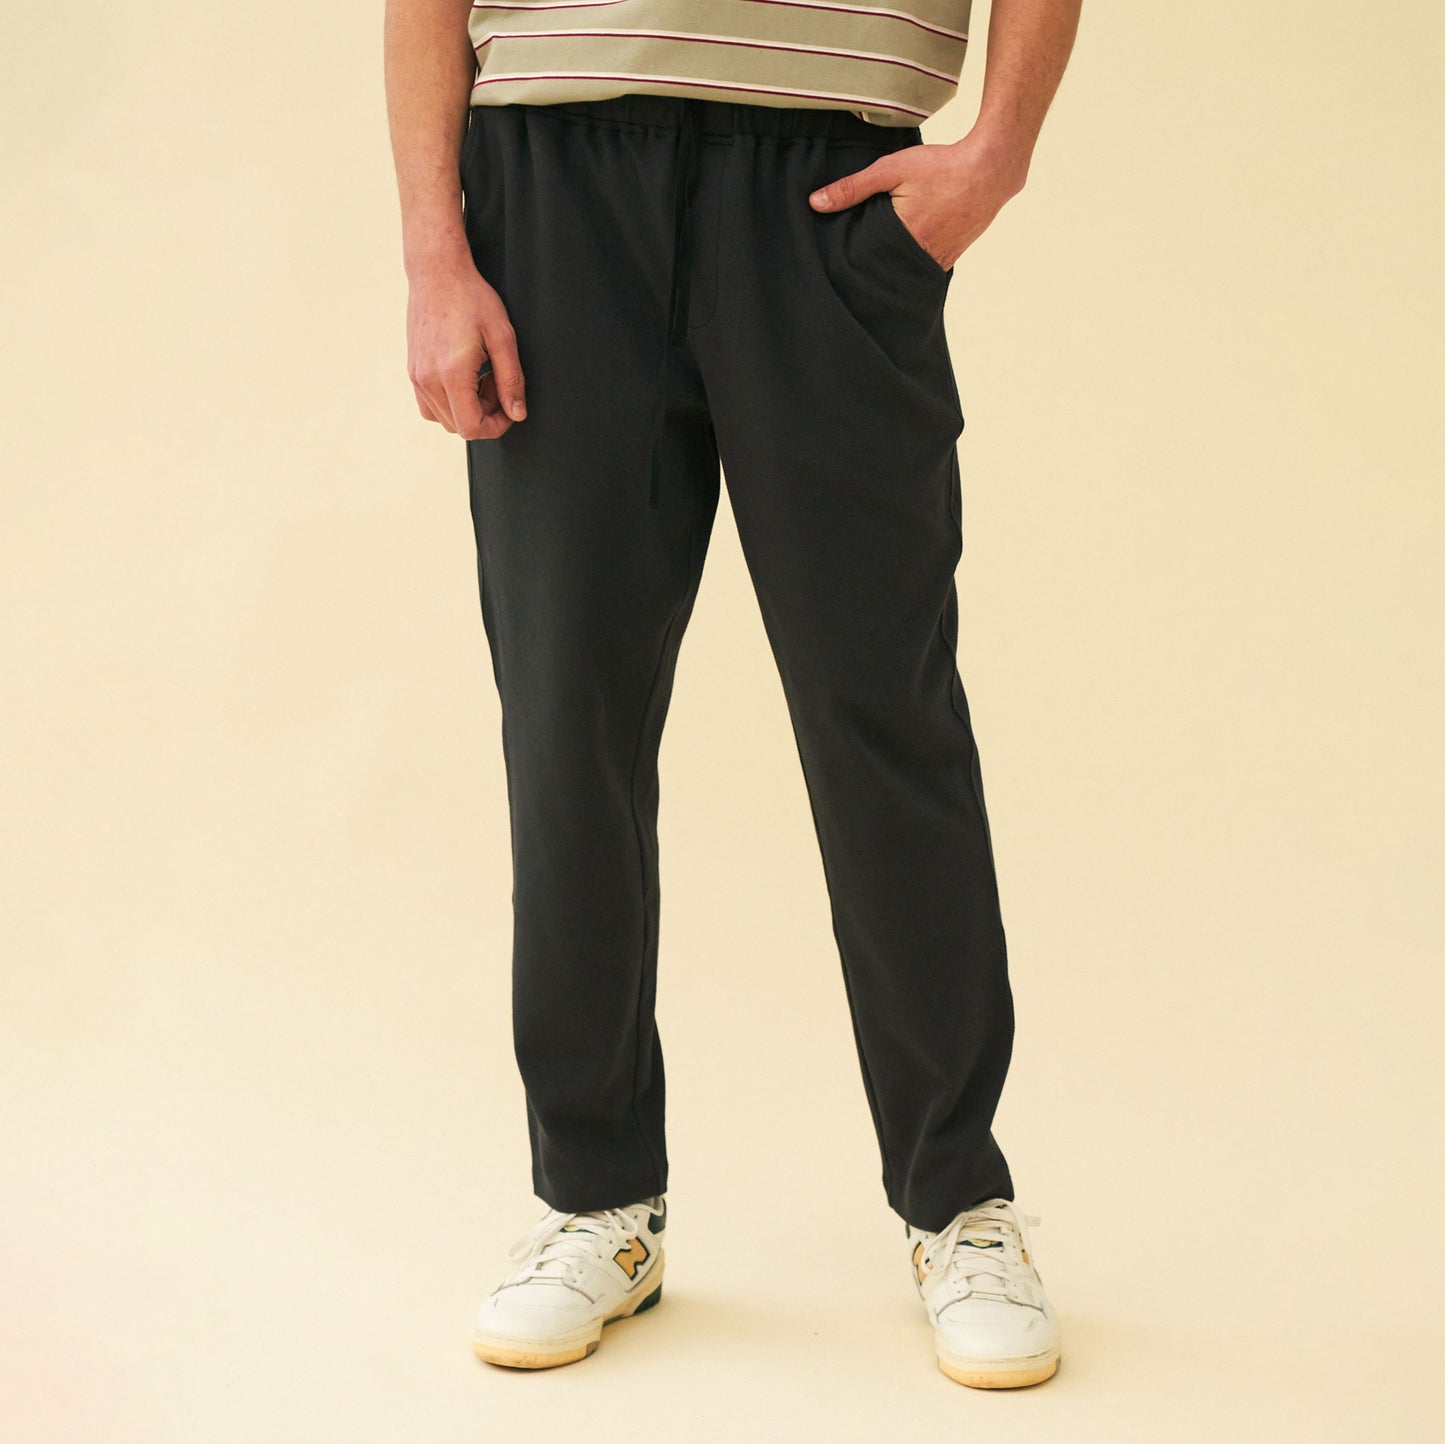 bound 'Graphite Black' Textured Cotton Trousers